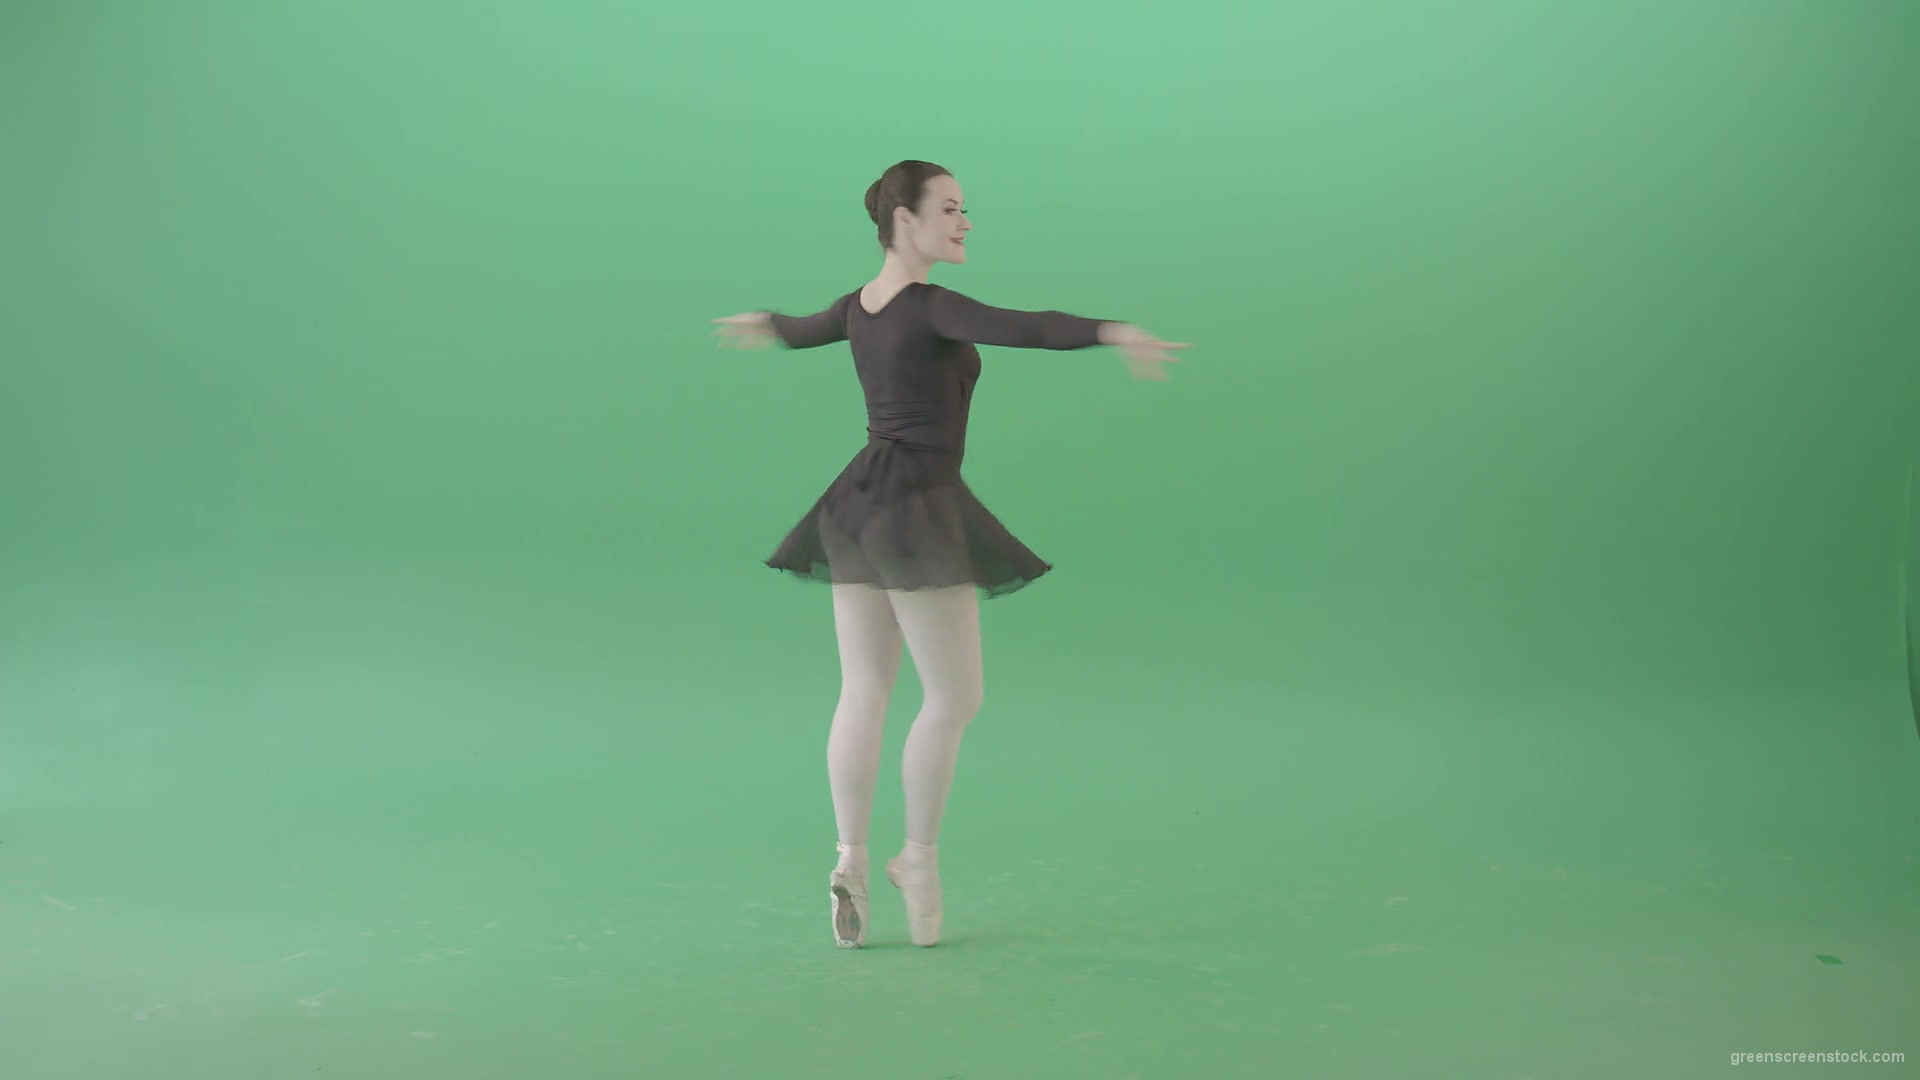 Ballet-Art-Ballerina-girl-spinning-in-dance-on-green-screen-4K-Video-Footage-1920_005 Green Screen Stock